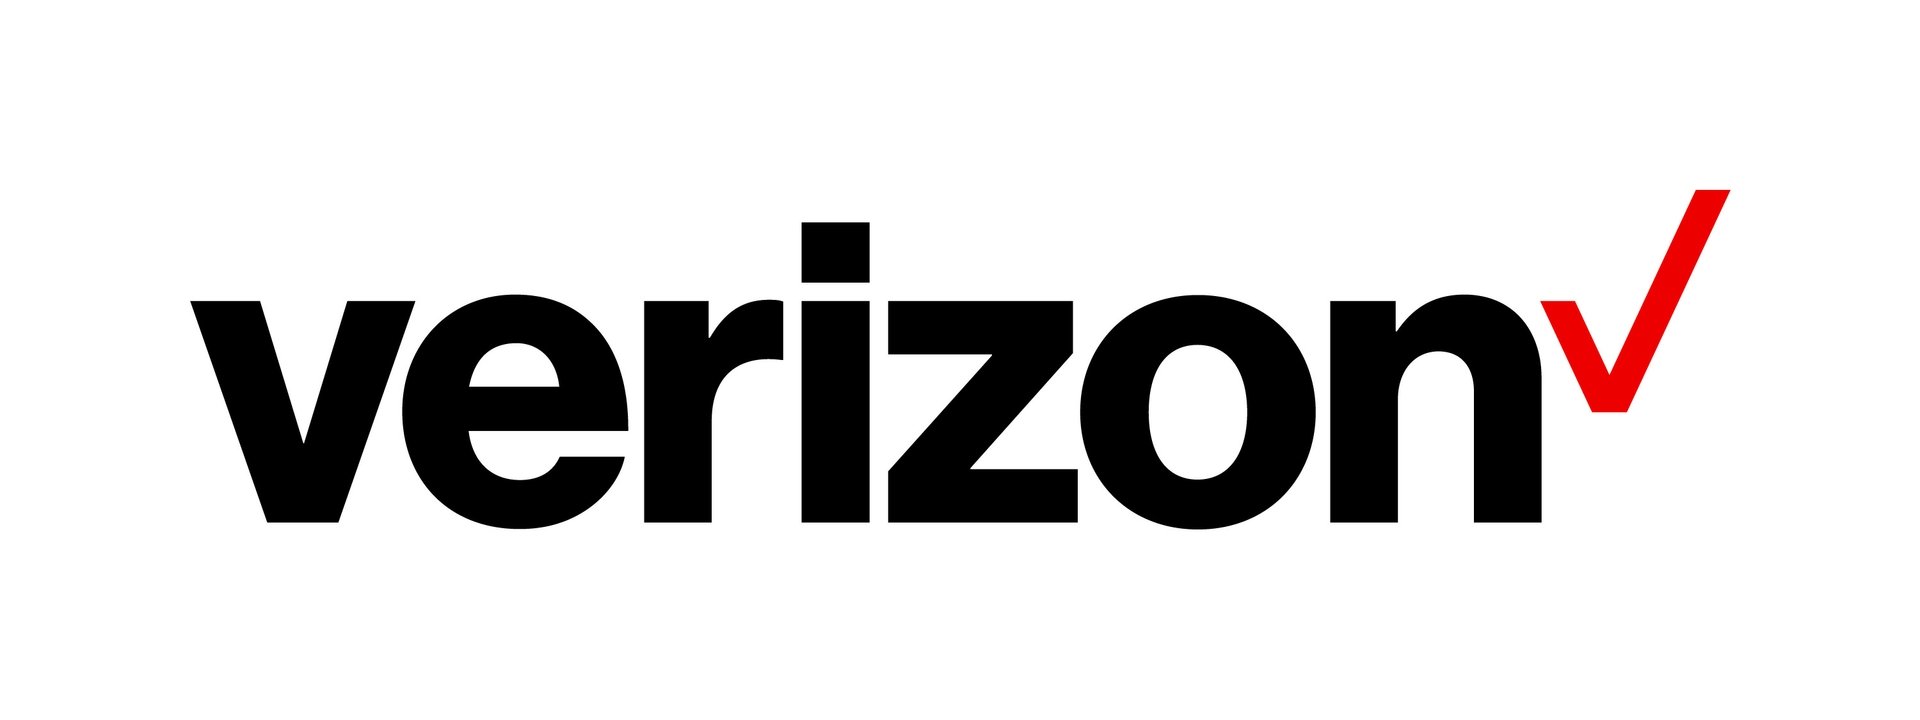 Verizon logo.jpeg